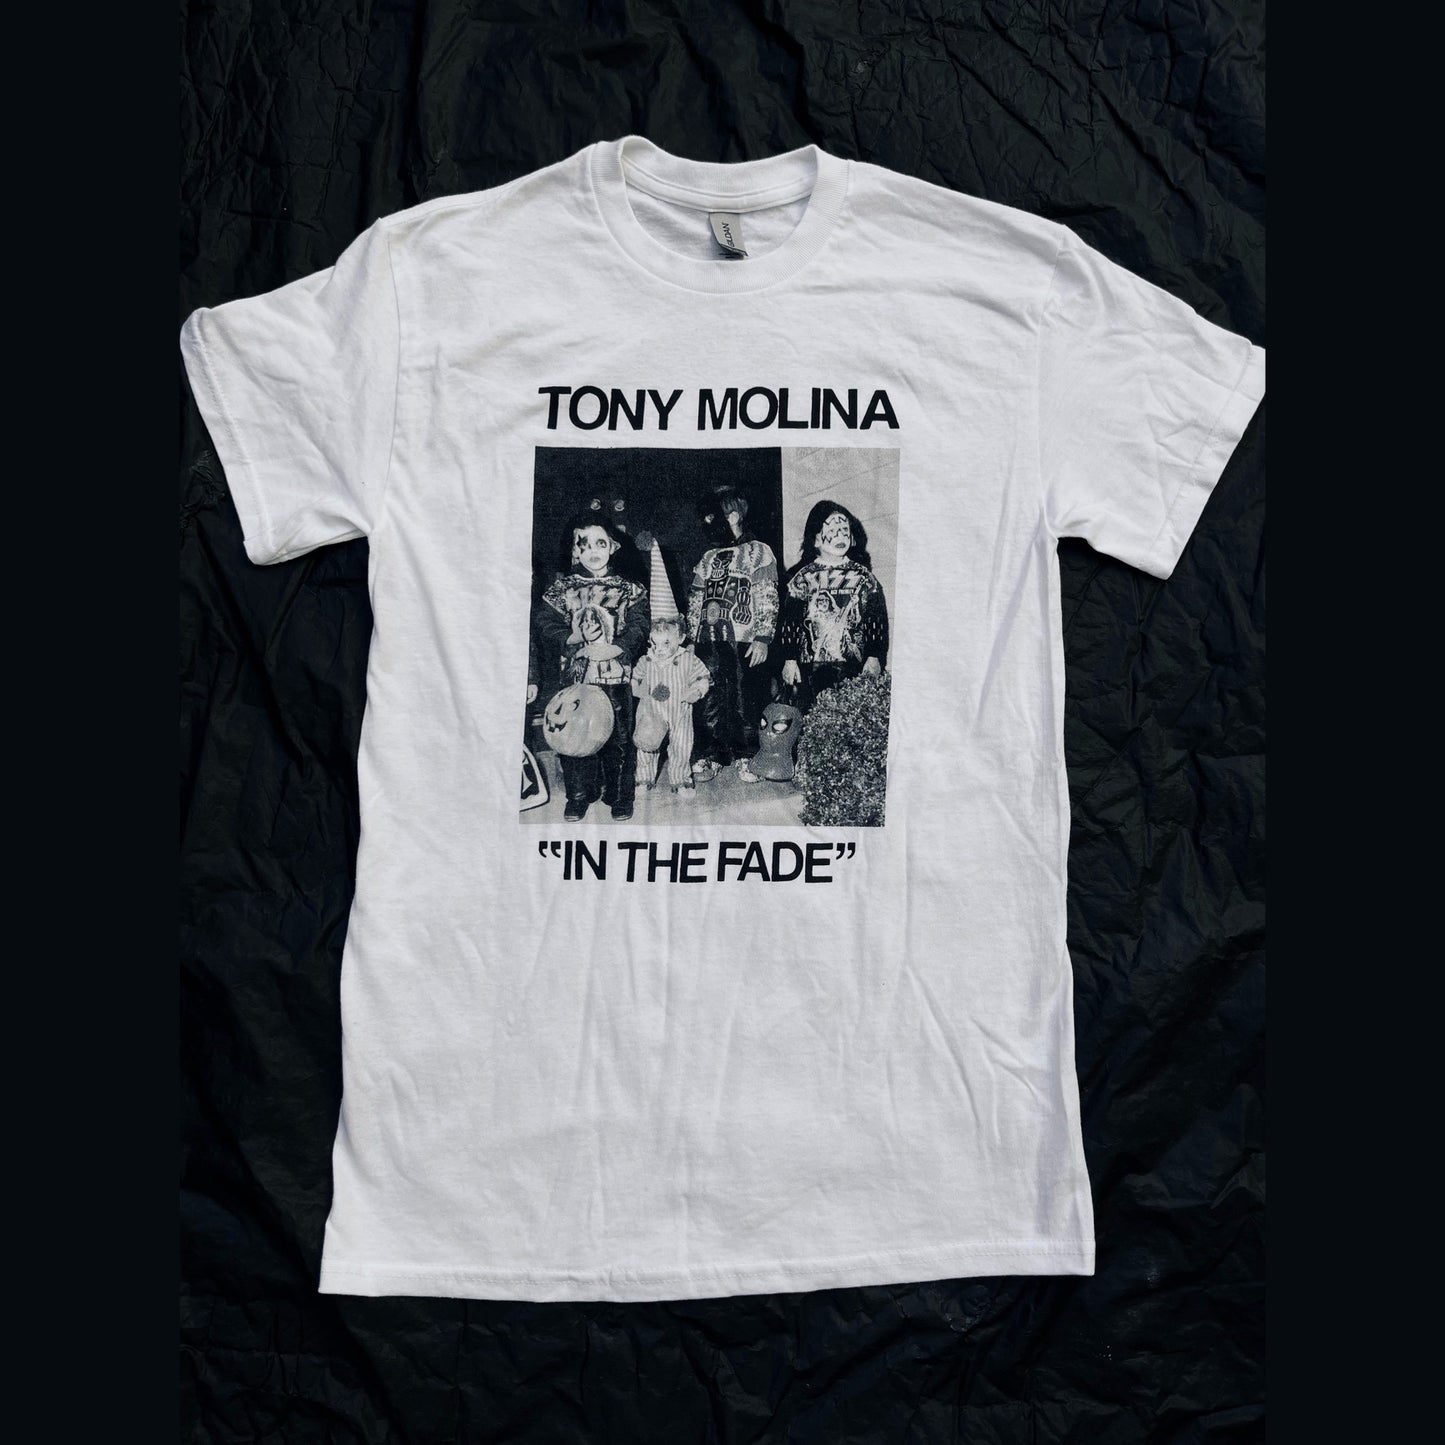 Tony Molina "In The Fade" Two-Sided Tshirt